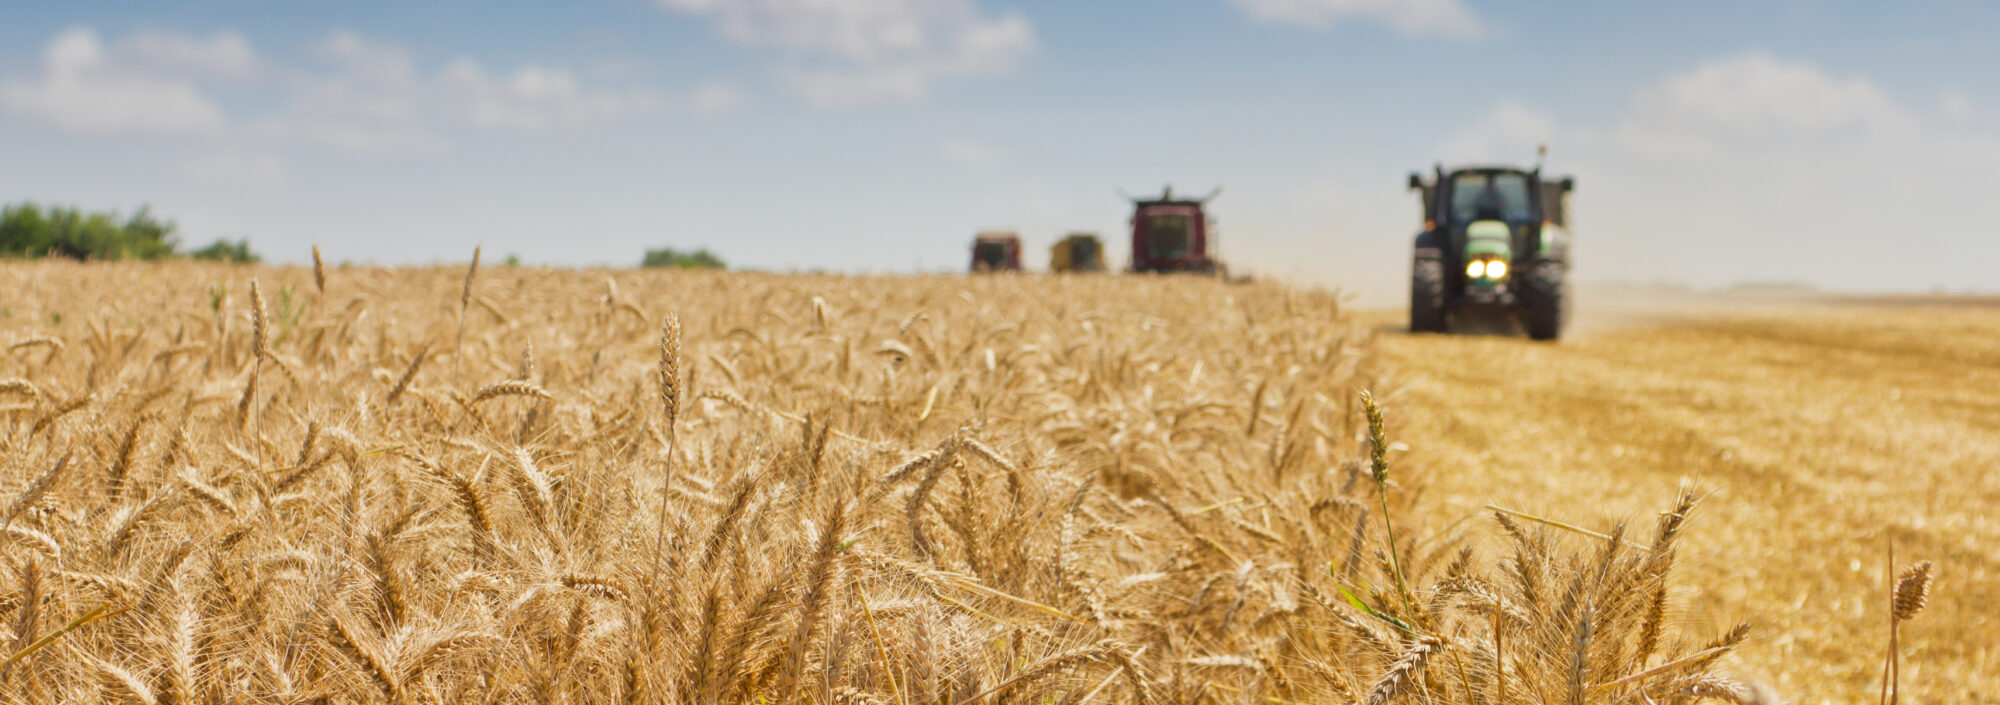 Combine harvester harvesting wheat .